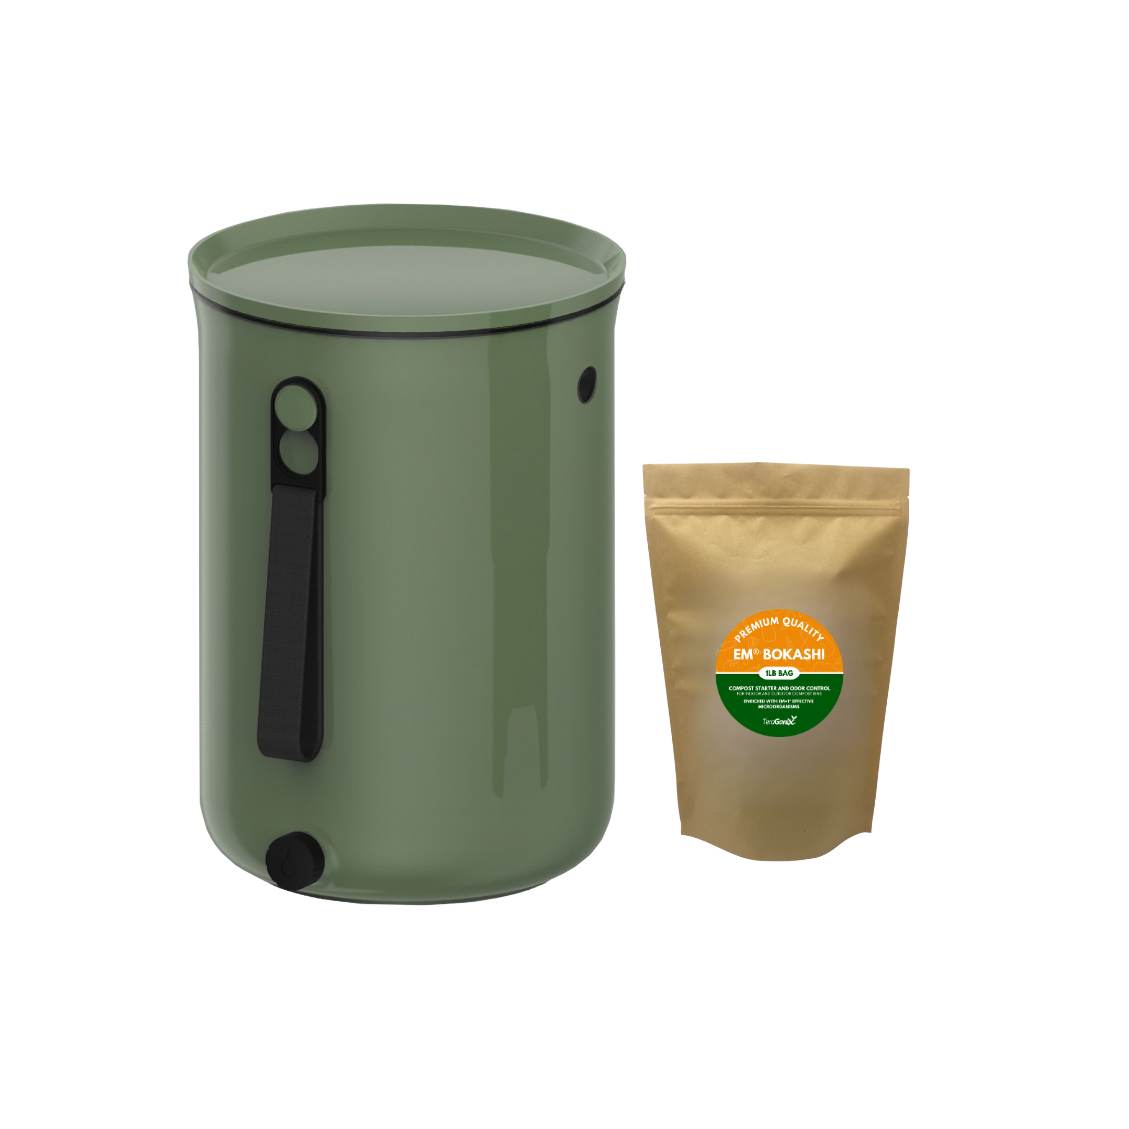 All Seasons Bokashi - Indoor Composting - 1 Gallon 